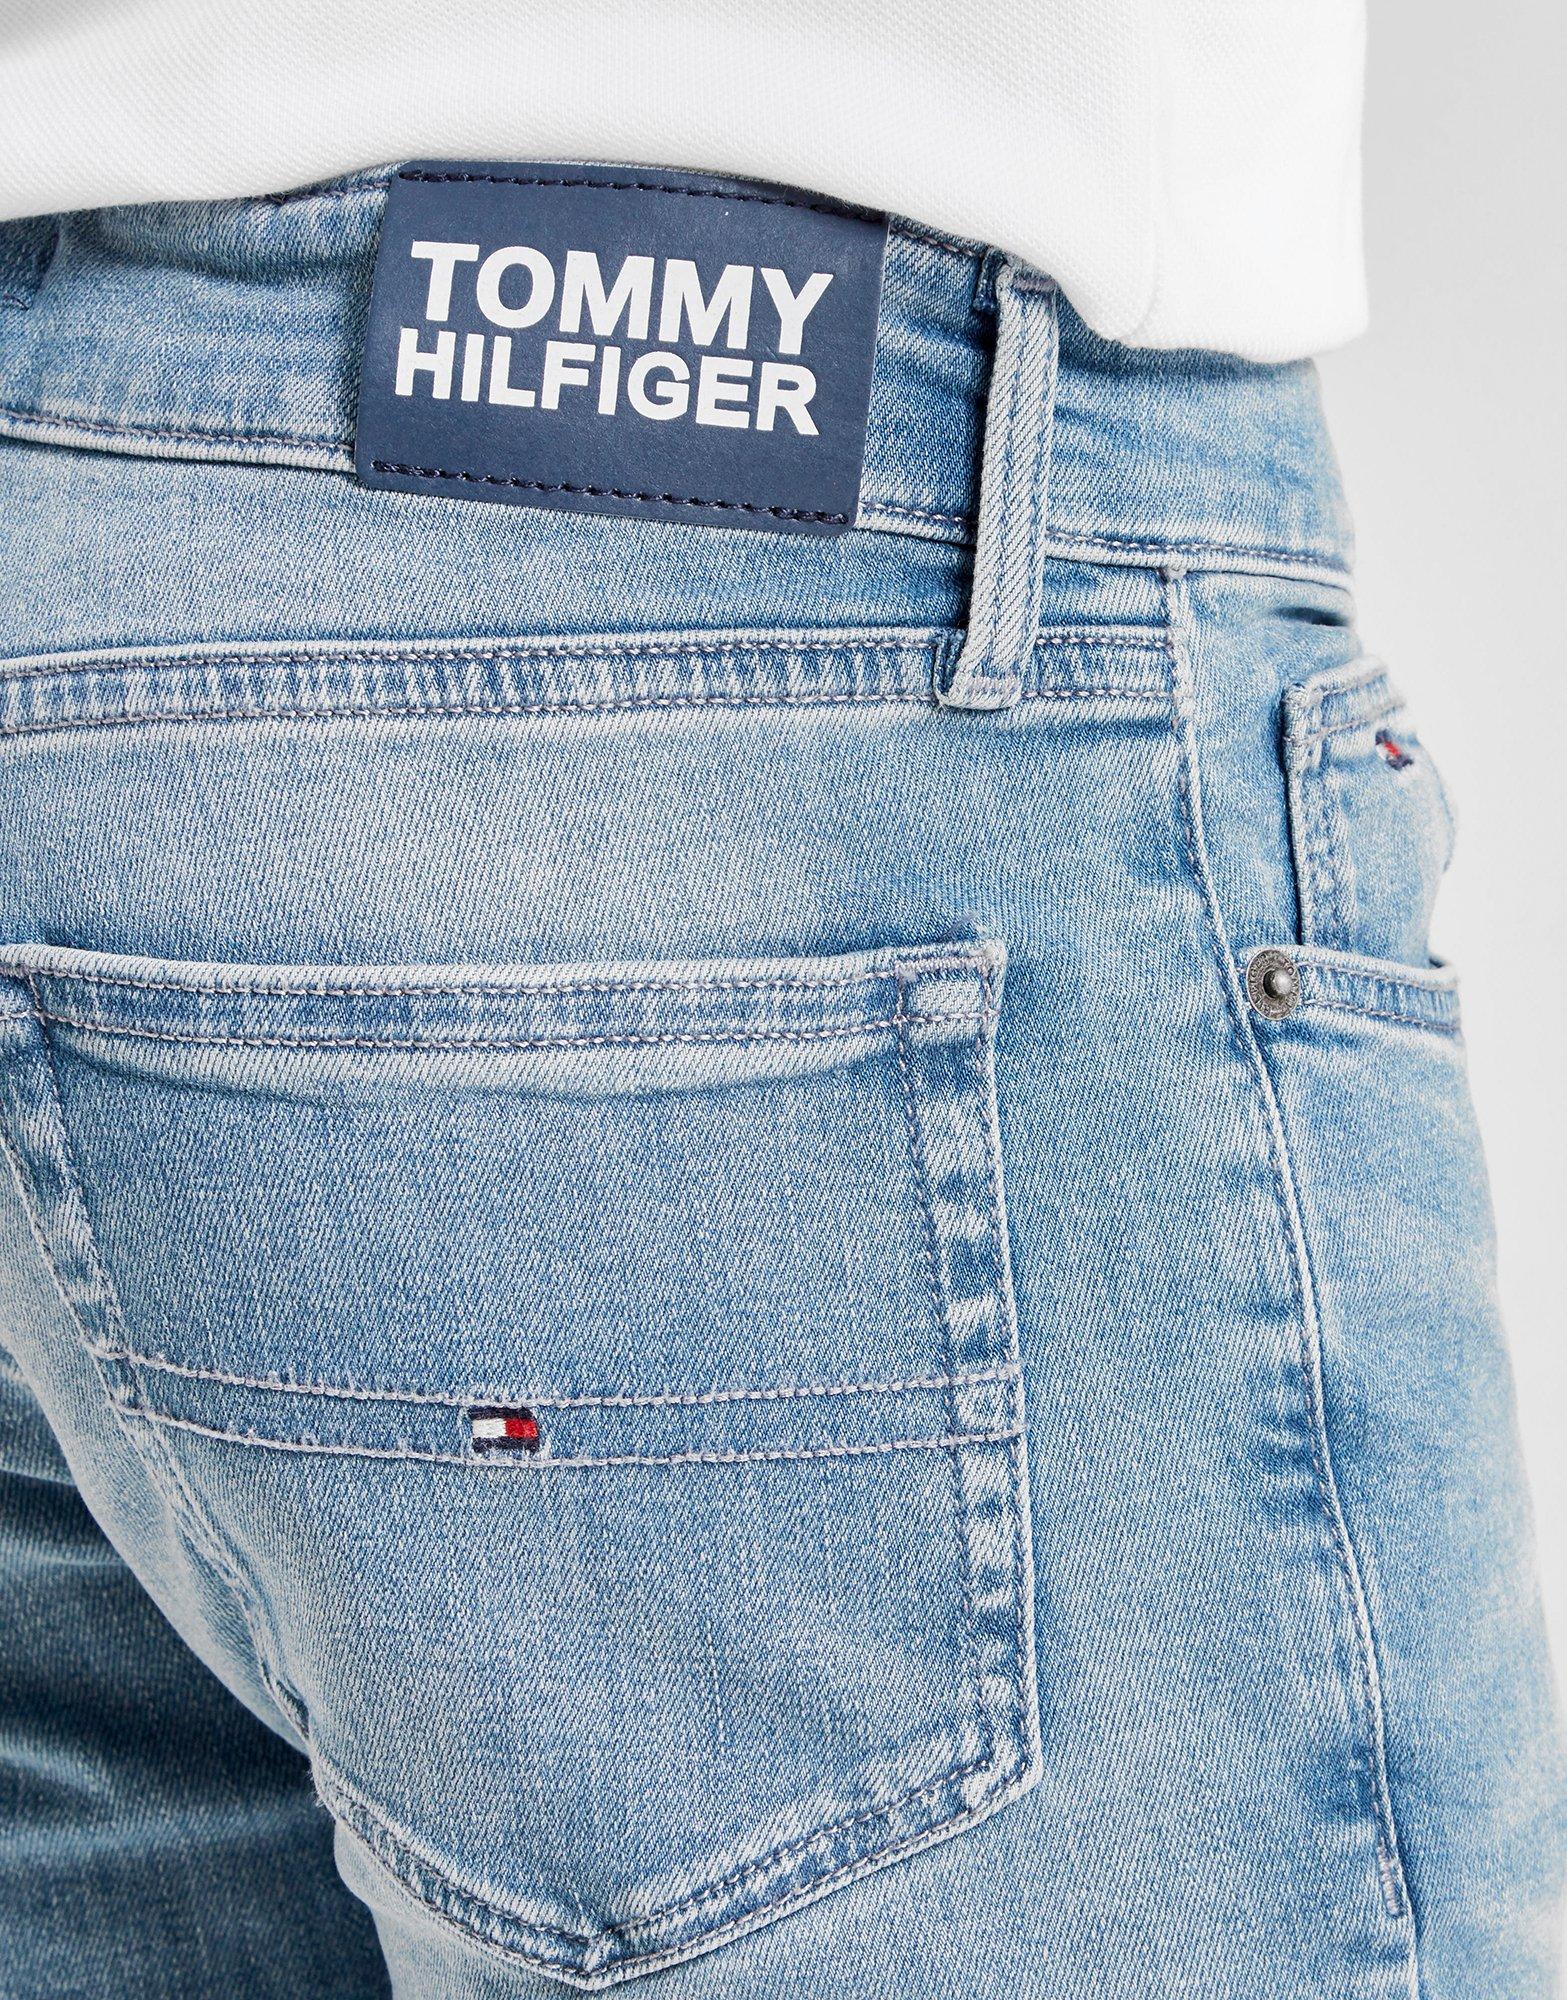 tommy hilfiger blue jeans